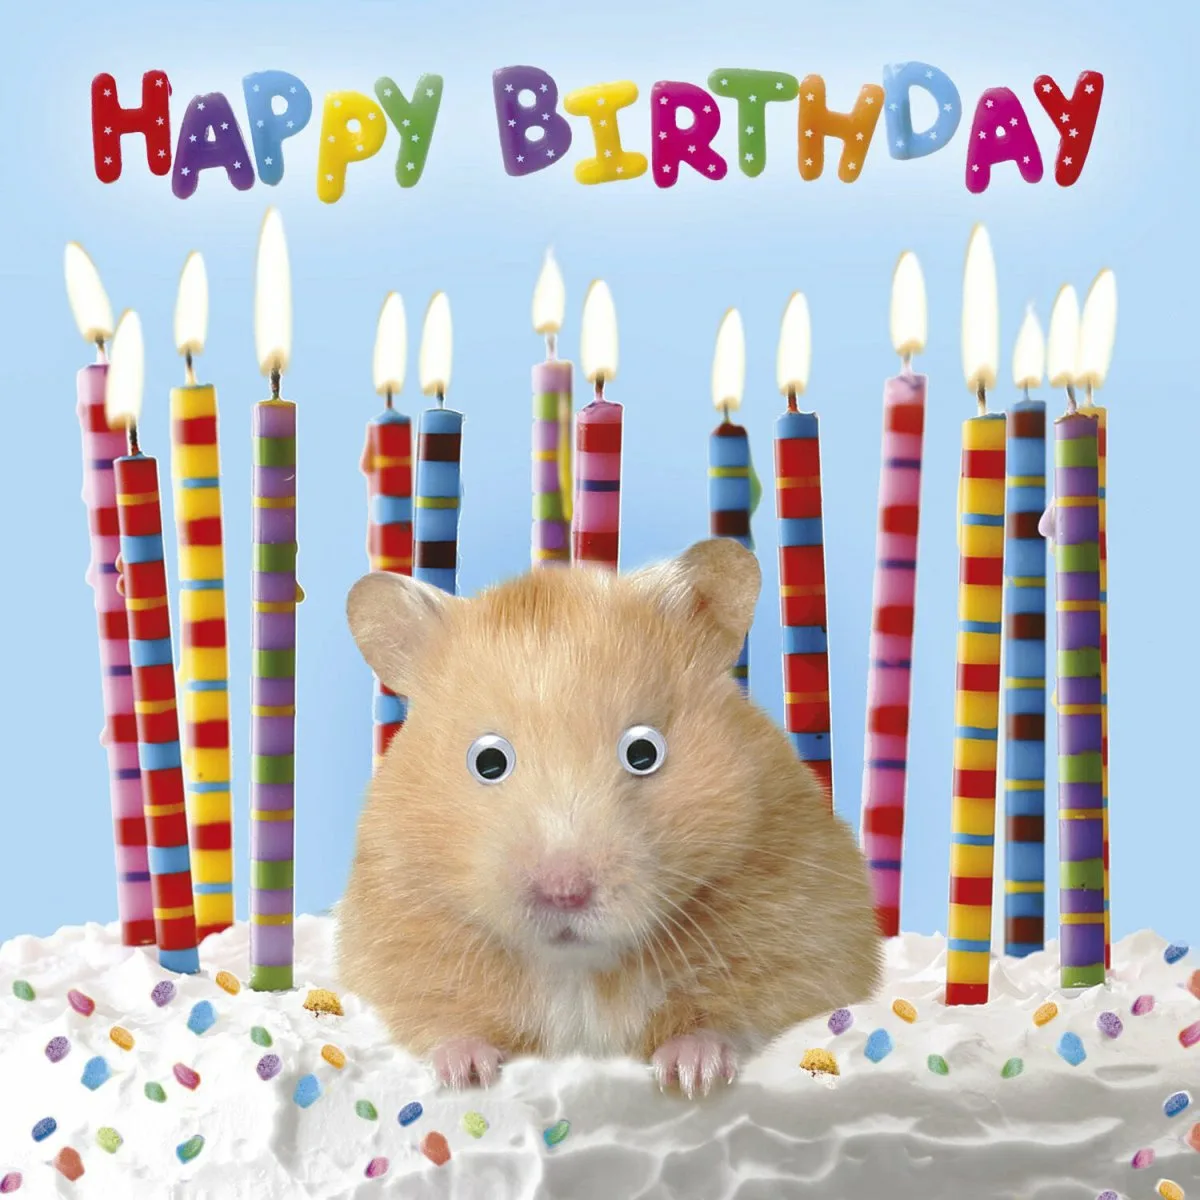 Хомячки открытка. С днем рождения хомячок. Хомяк поздравляет с днем рождения. Открытки с днем рождения с хомячком. Поздравление хомяка с днем рождения.